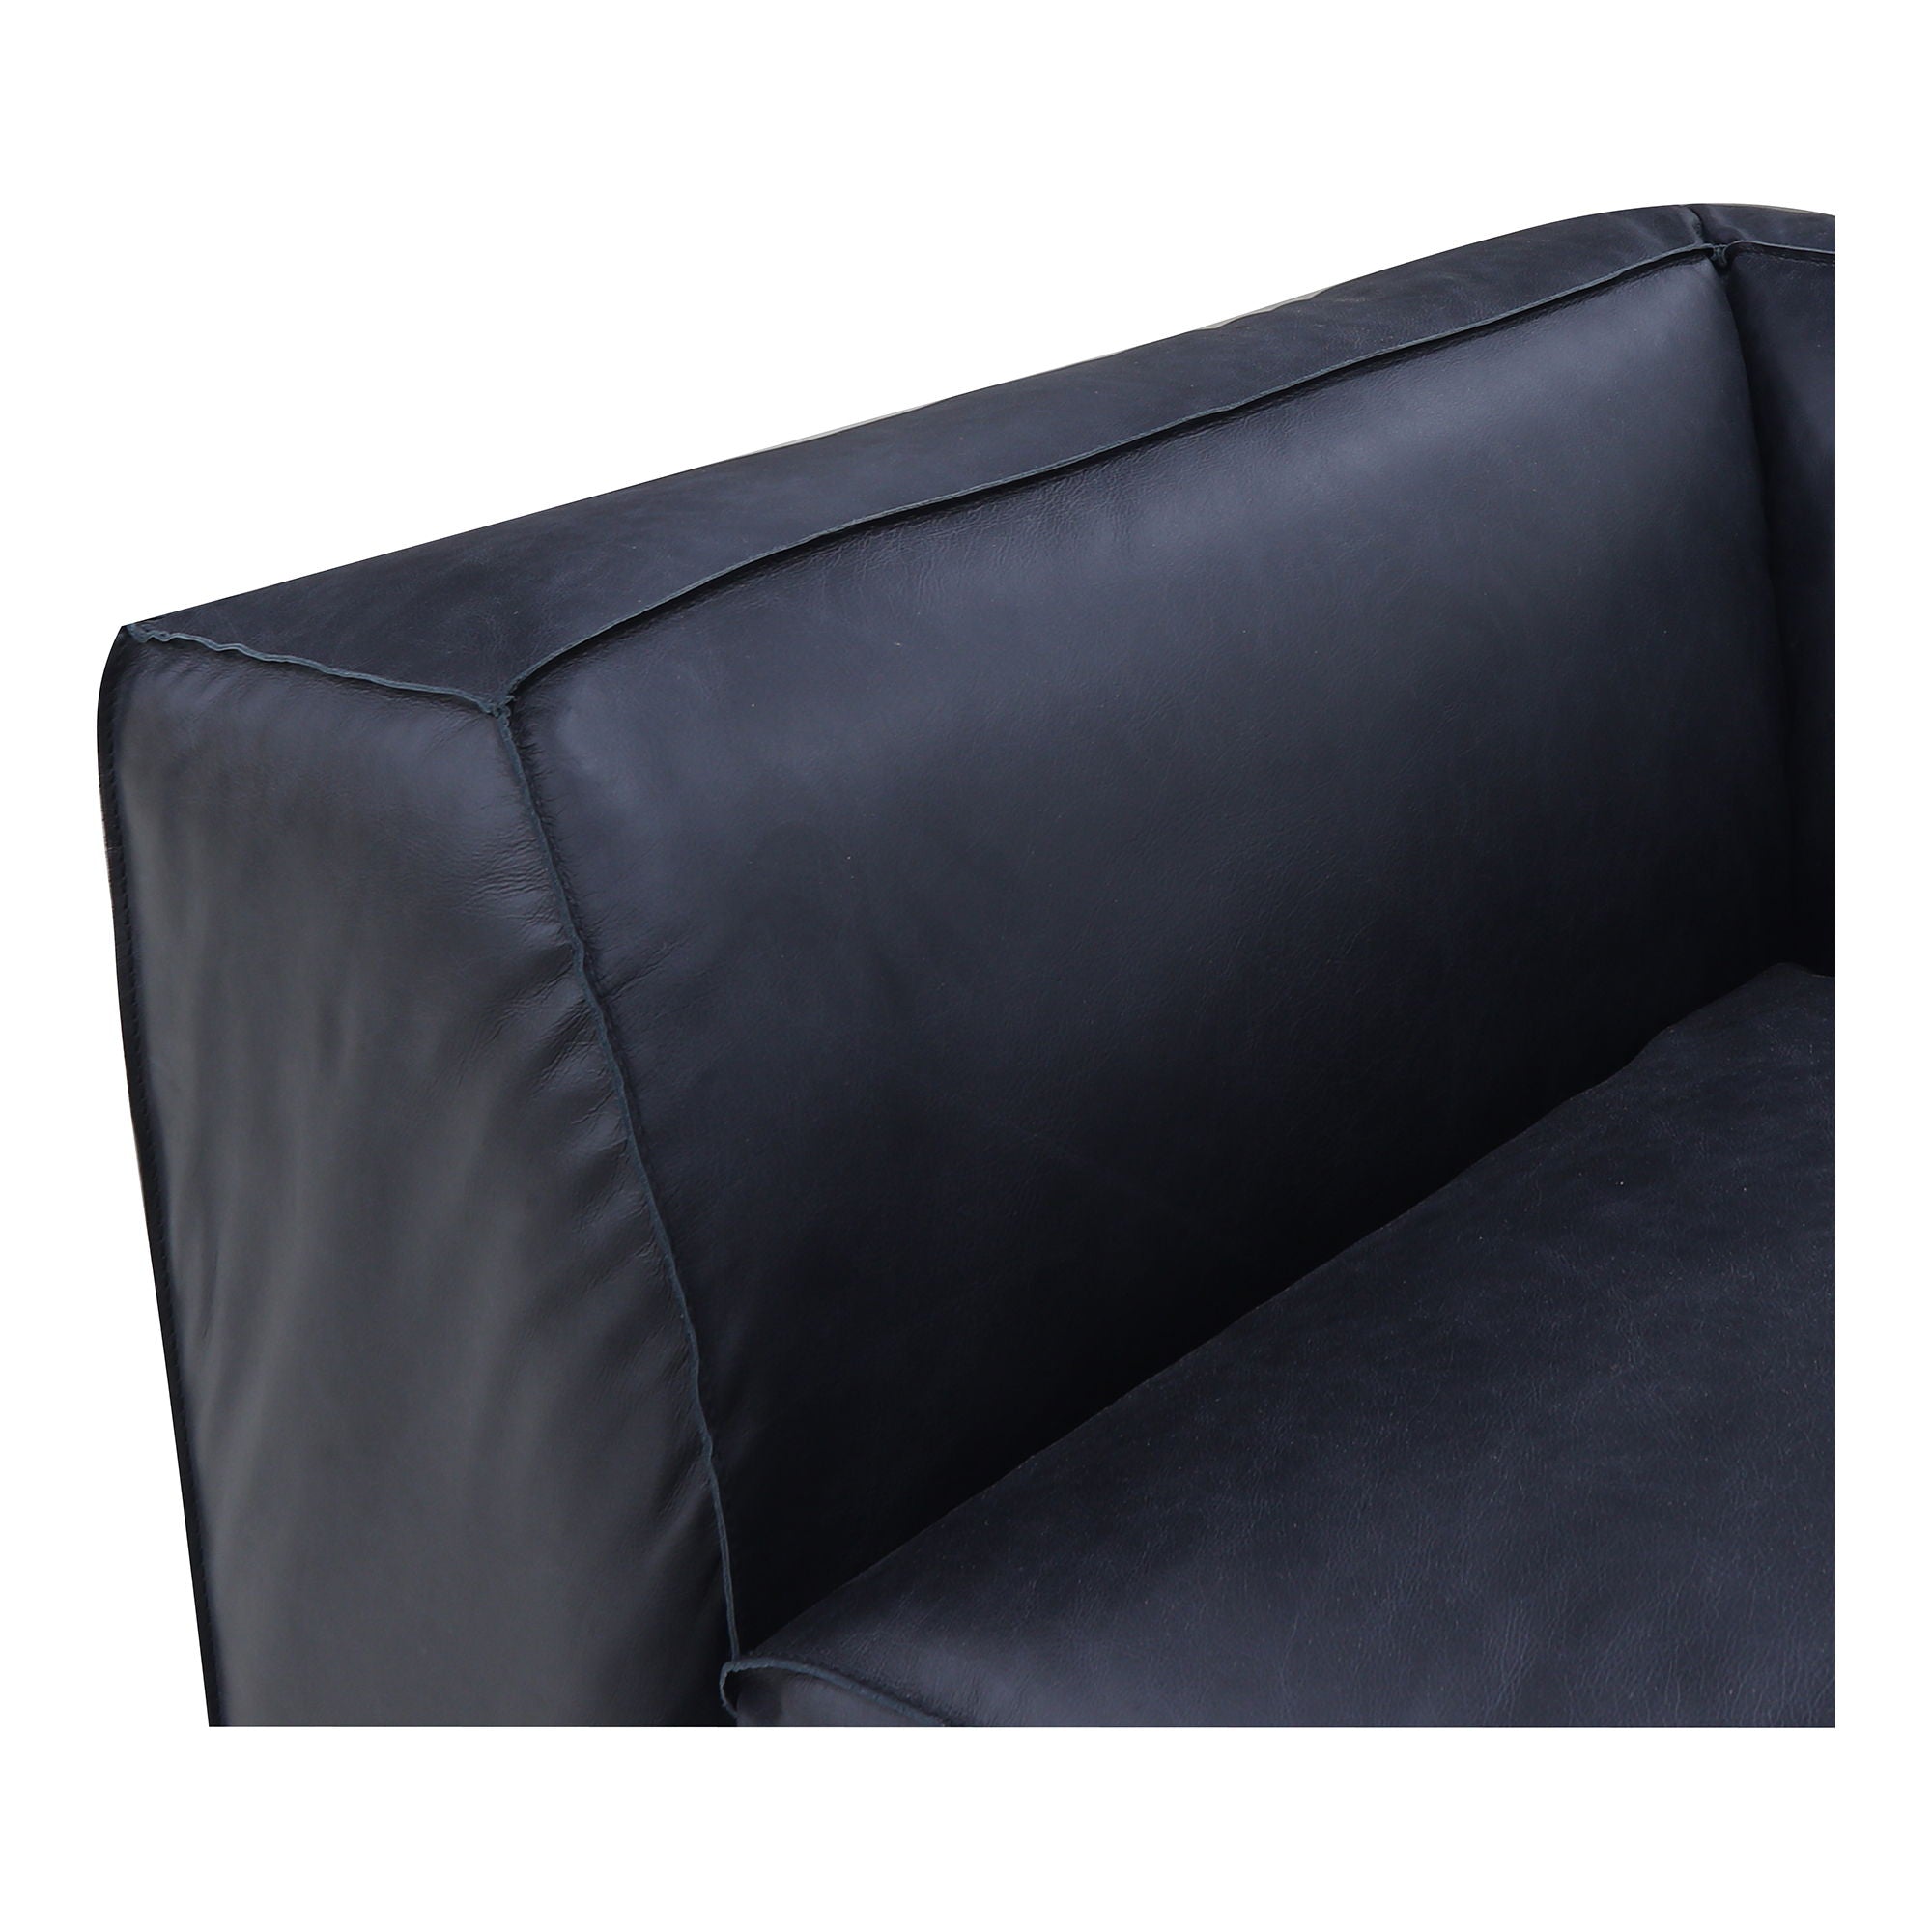 Form - Classic L Modular Sectional Vantage Black Leather